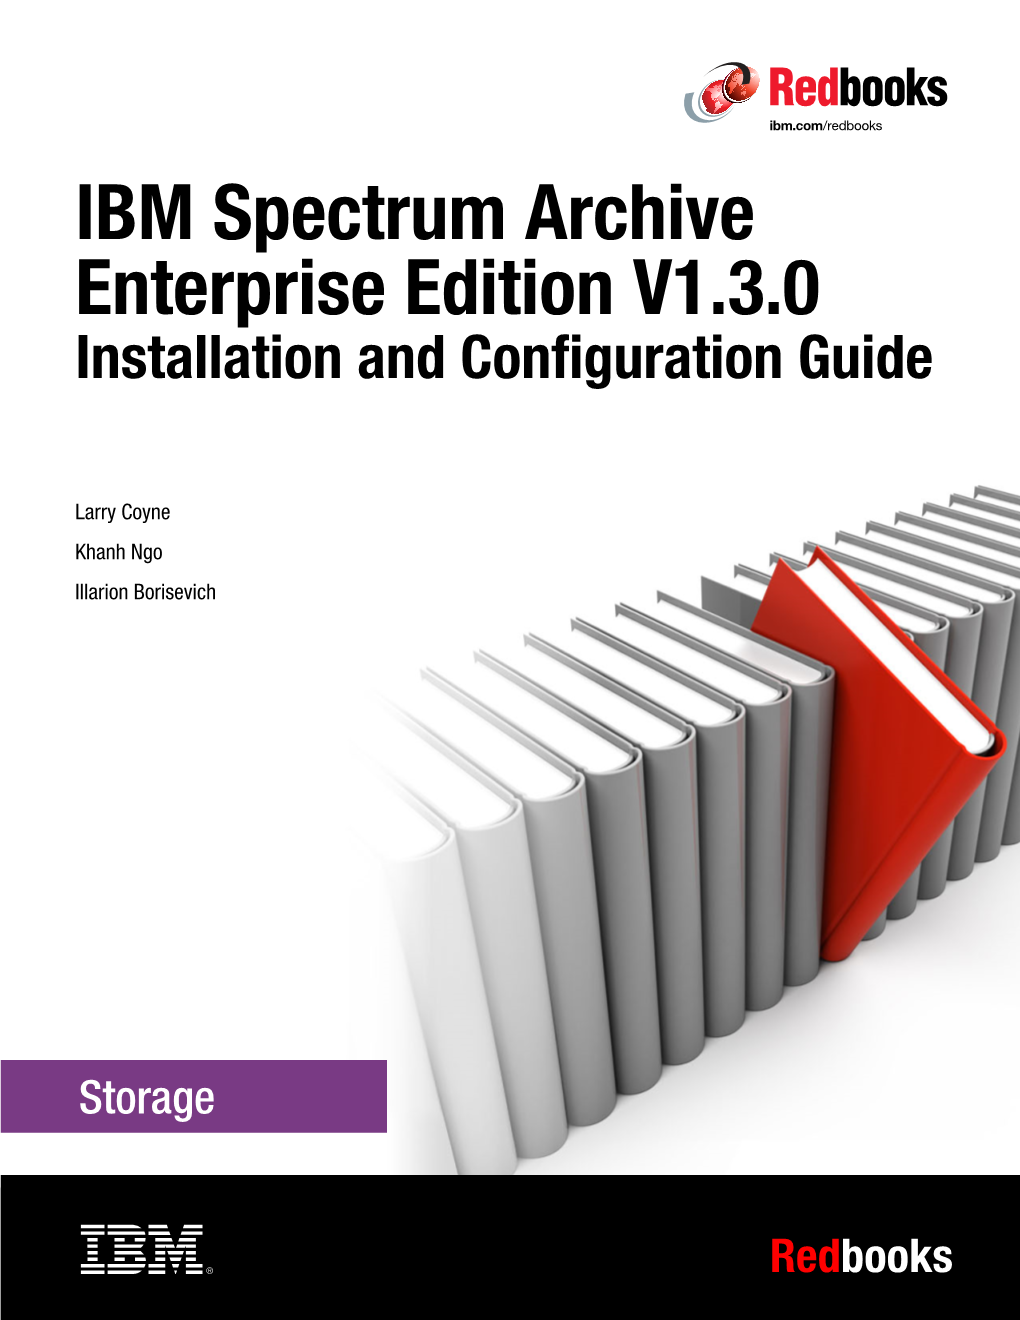 IBM Spectrum Archive Enterprise Edition V1.3.0 Installation and Configuration Guide